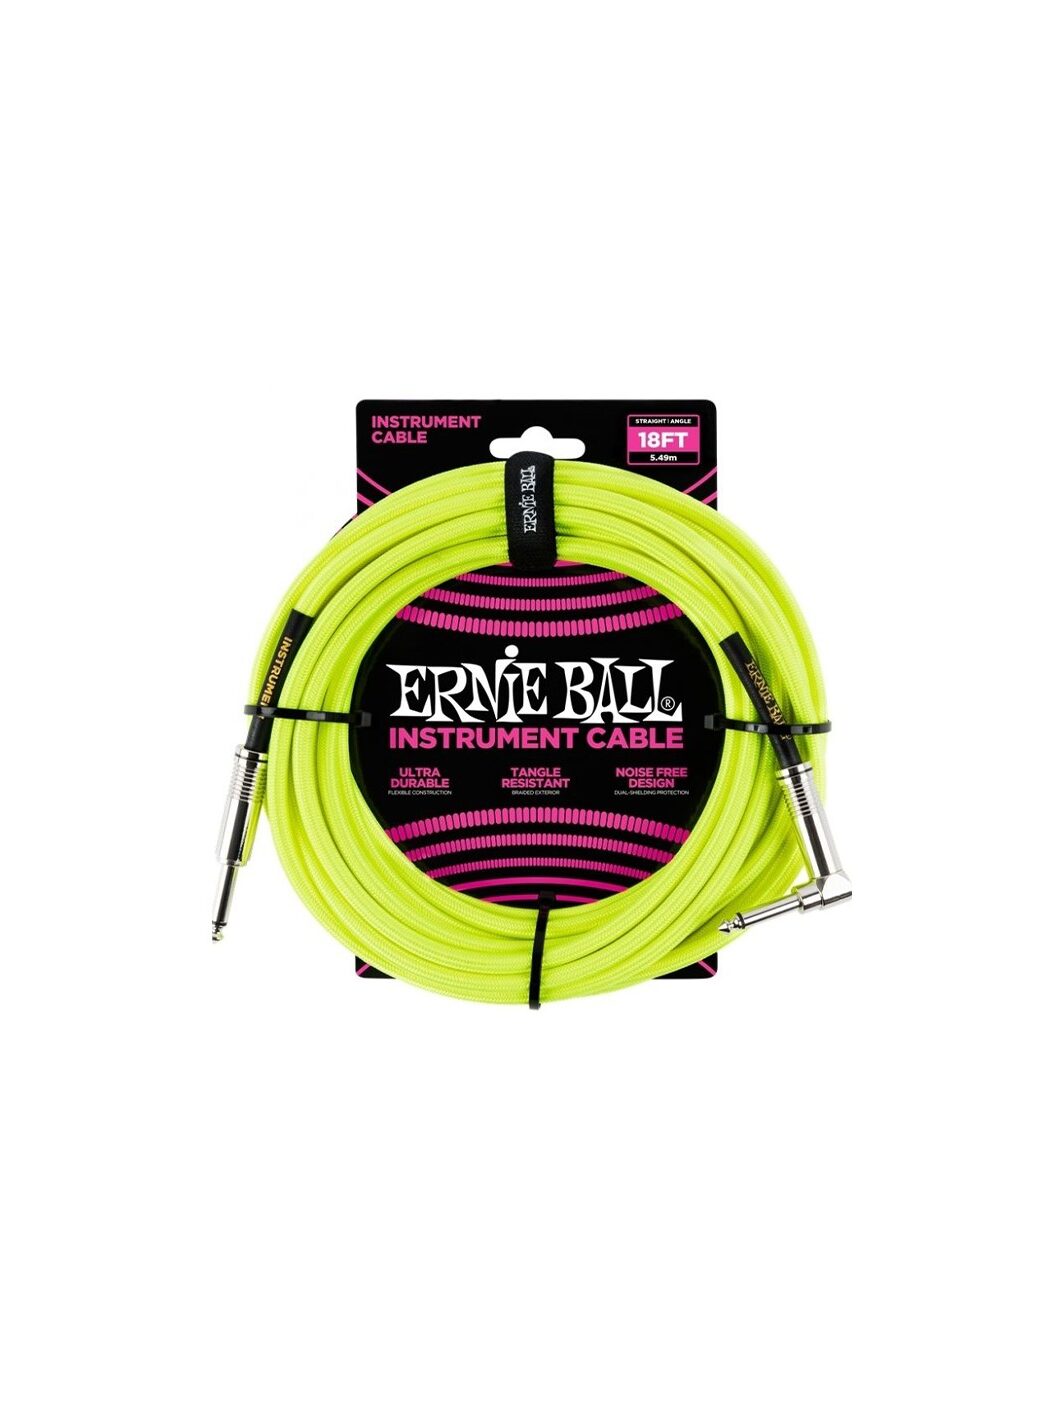 ERNIE BALL cavo braided Neon Yellow 18FT 5.49 MT.